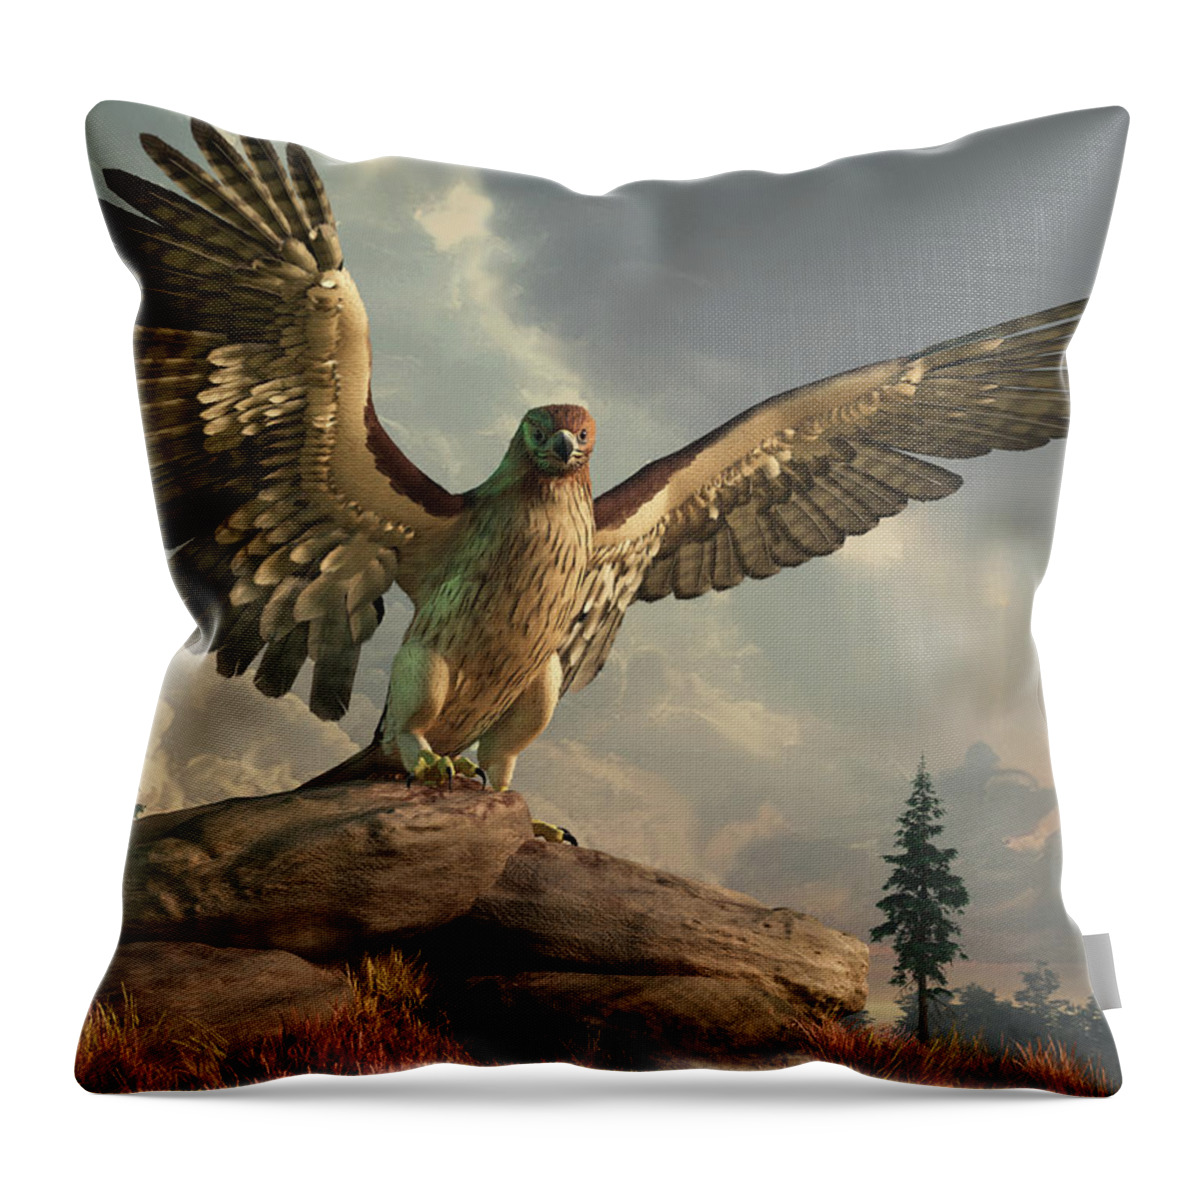 Hawk On The Rocks Throw Pillow featuring the digital art Hawk on the Rocks by Daniel Eskridge